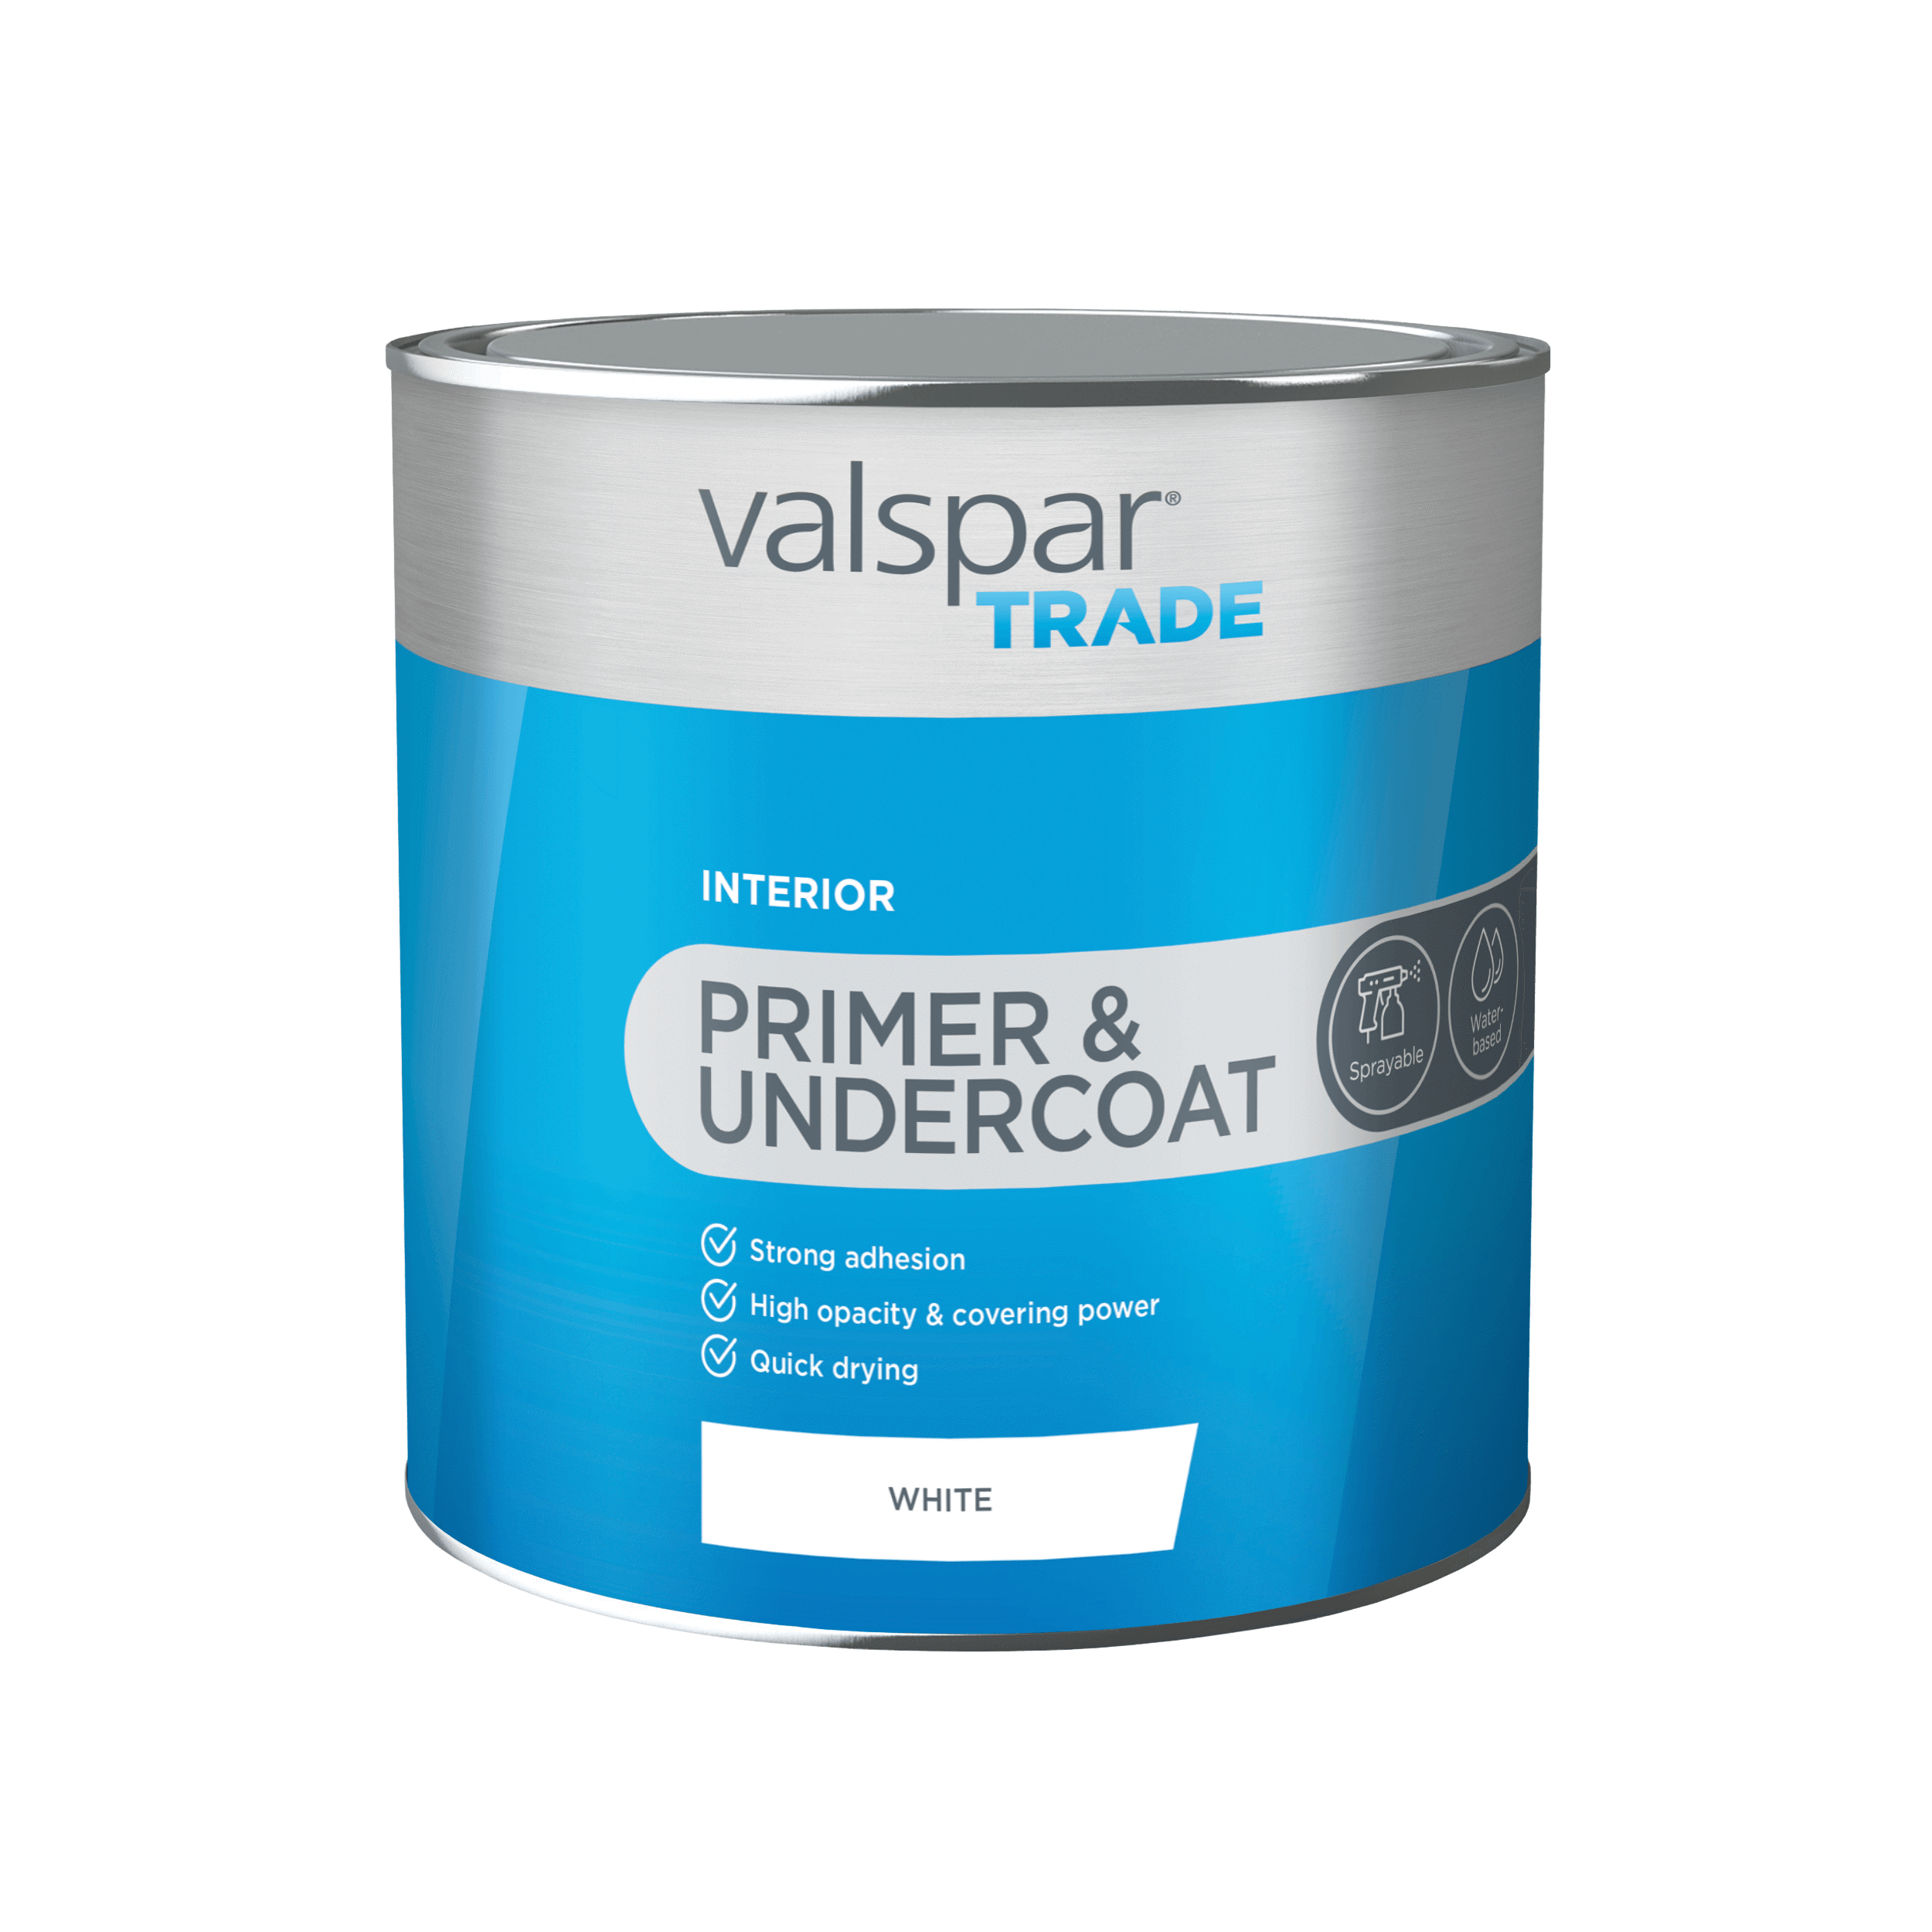 Valspar® Trade Ready Mix Primer